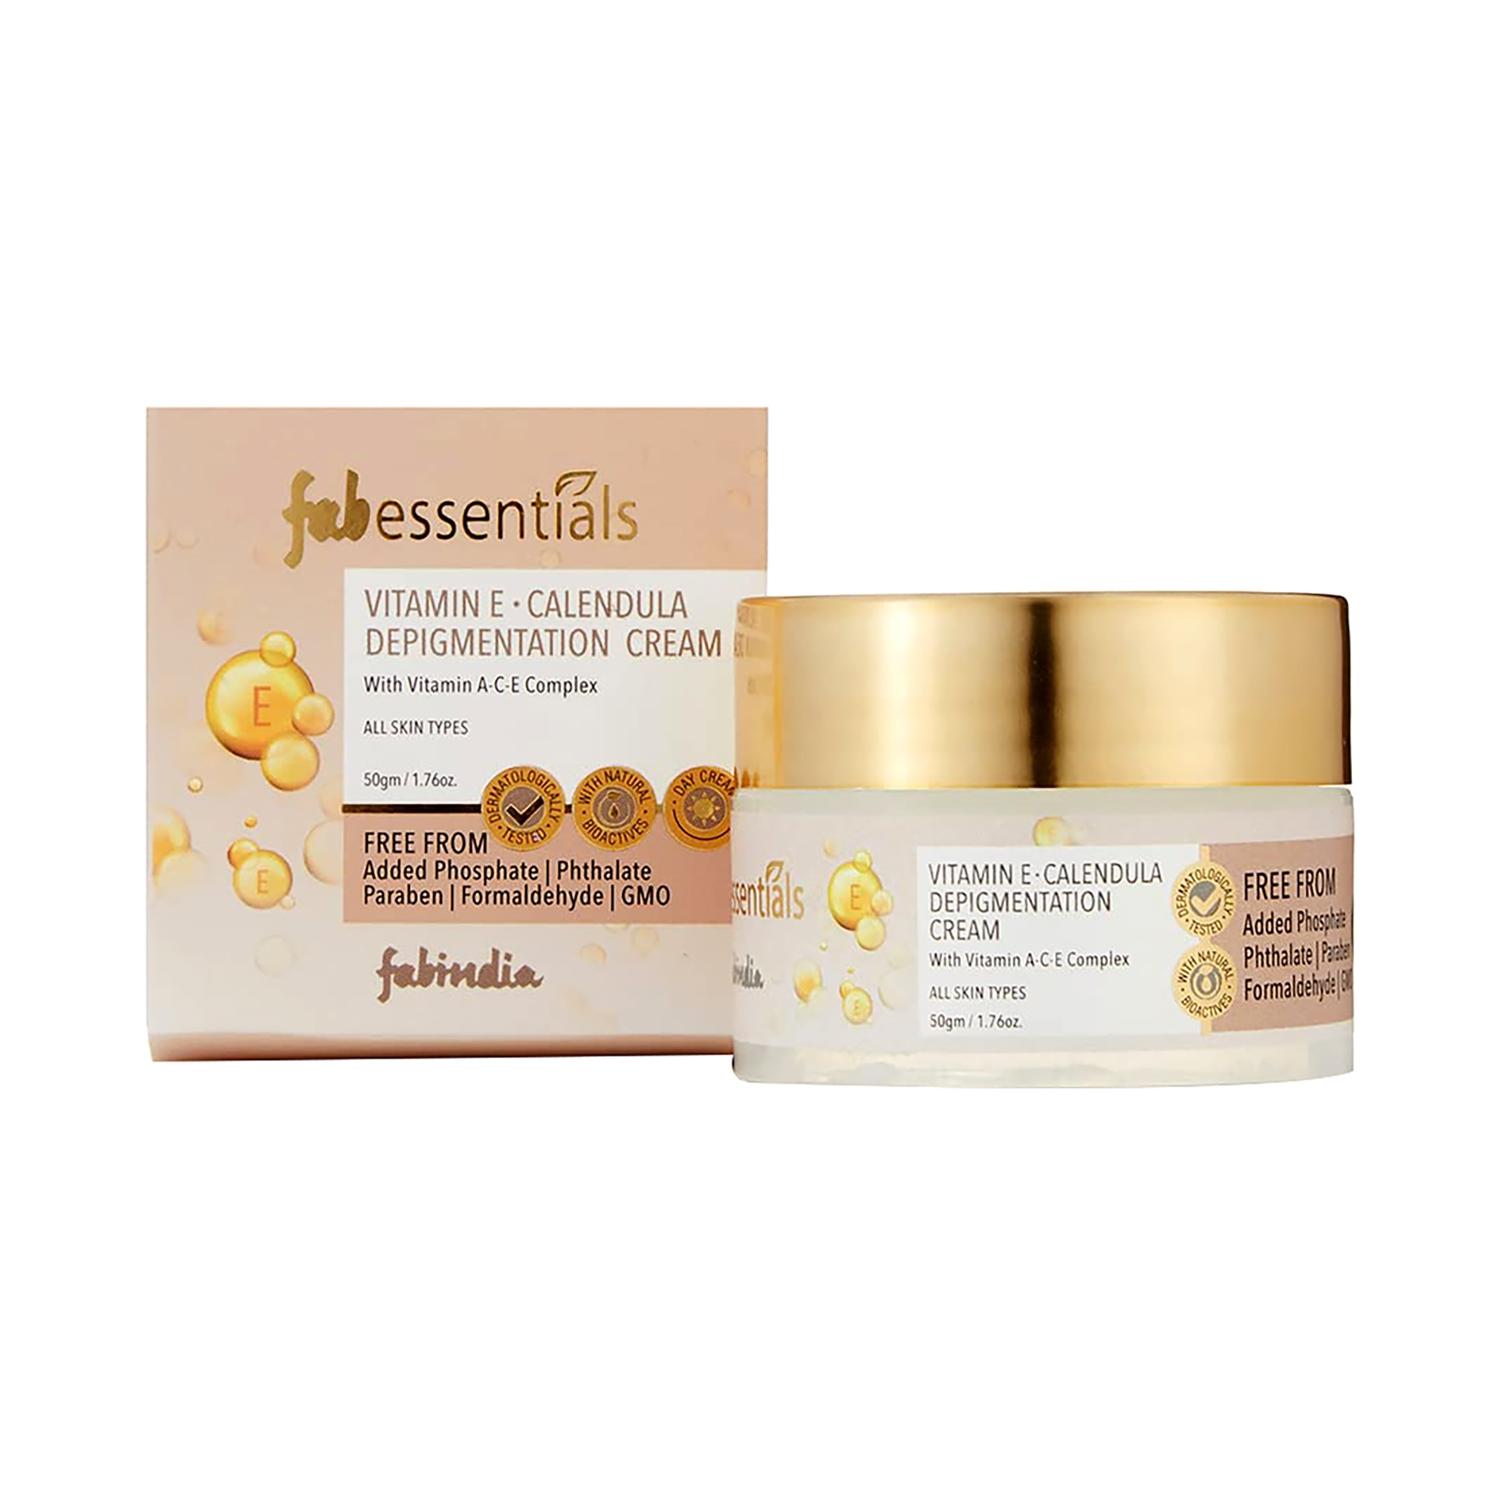 fabessentials vitamin e calendula depigmentation cream (50g)